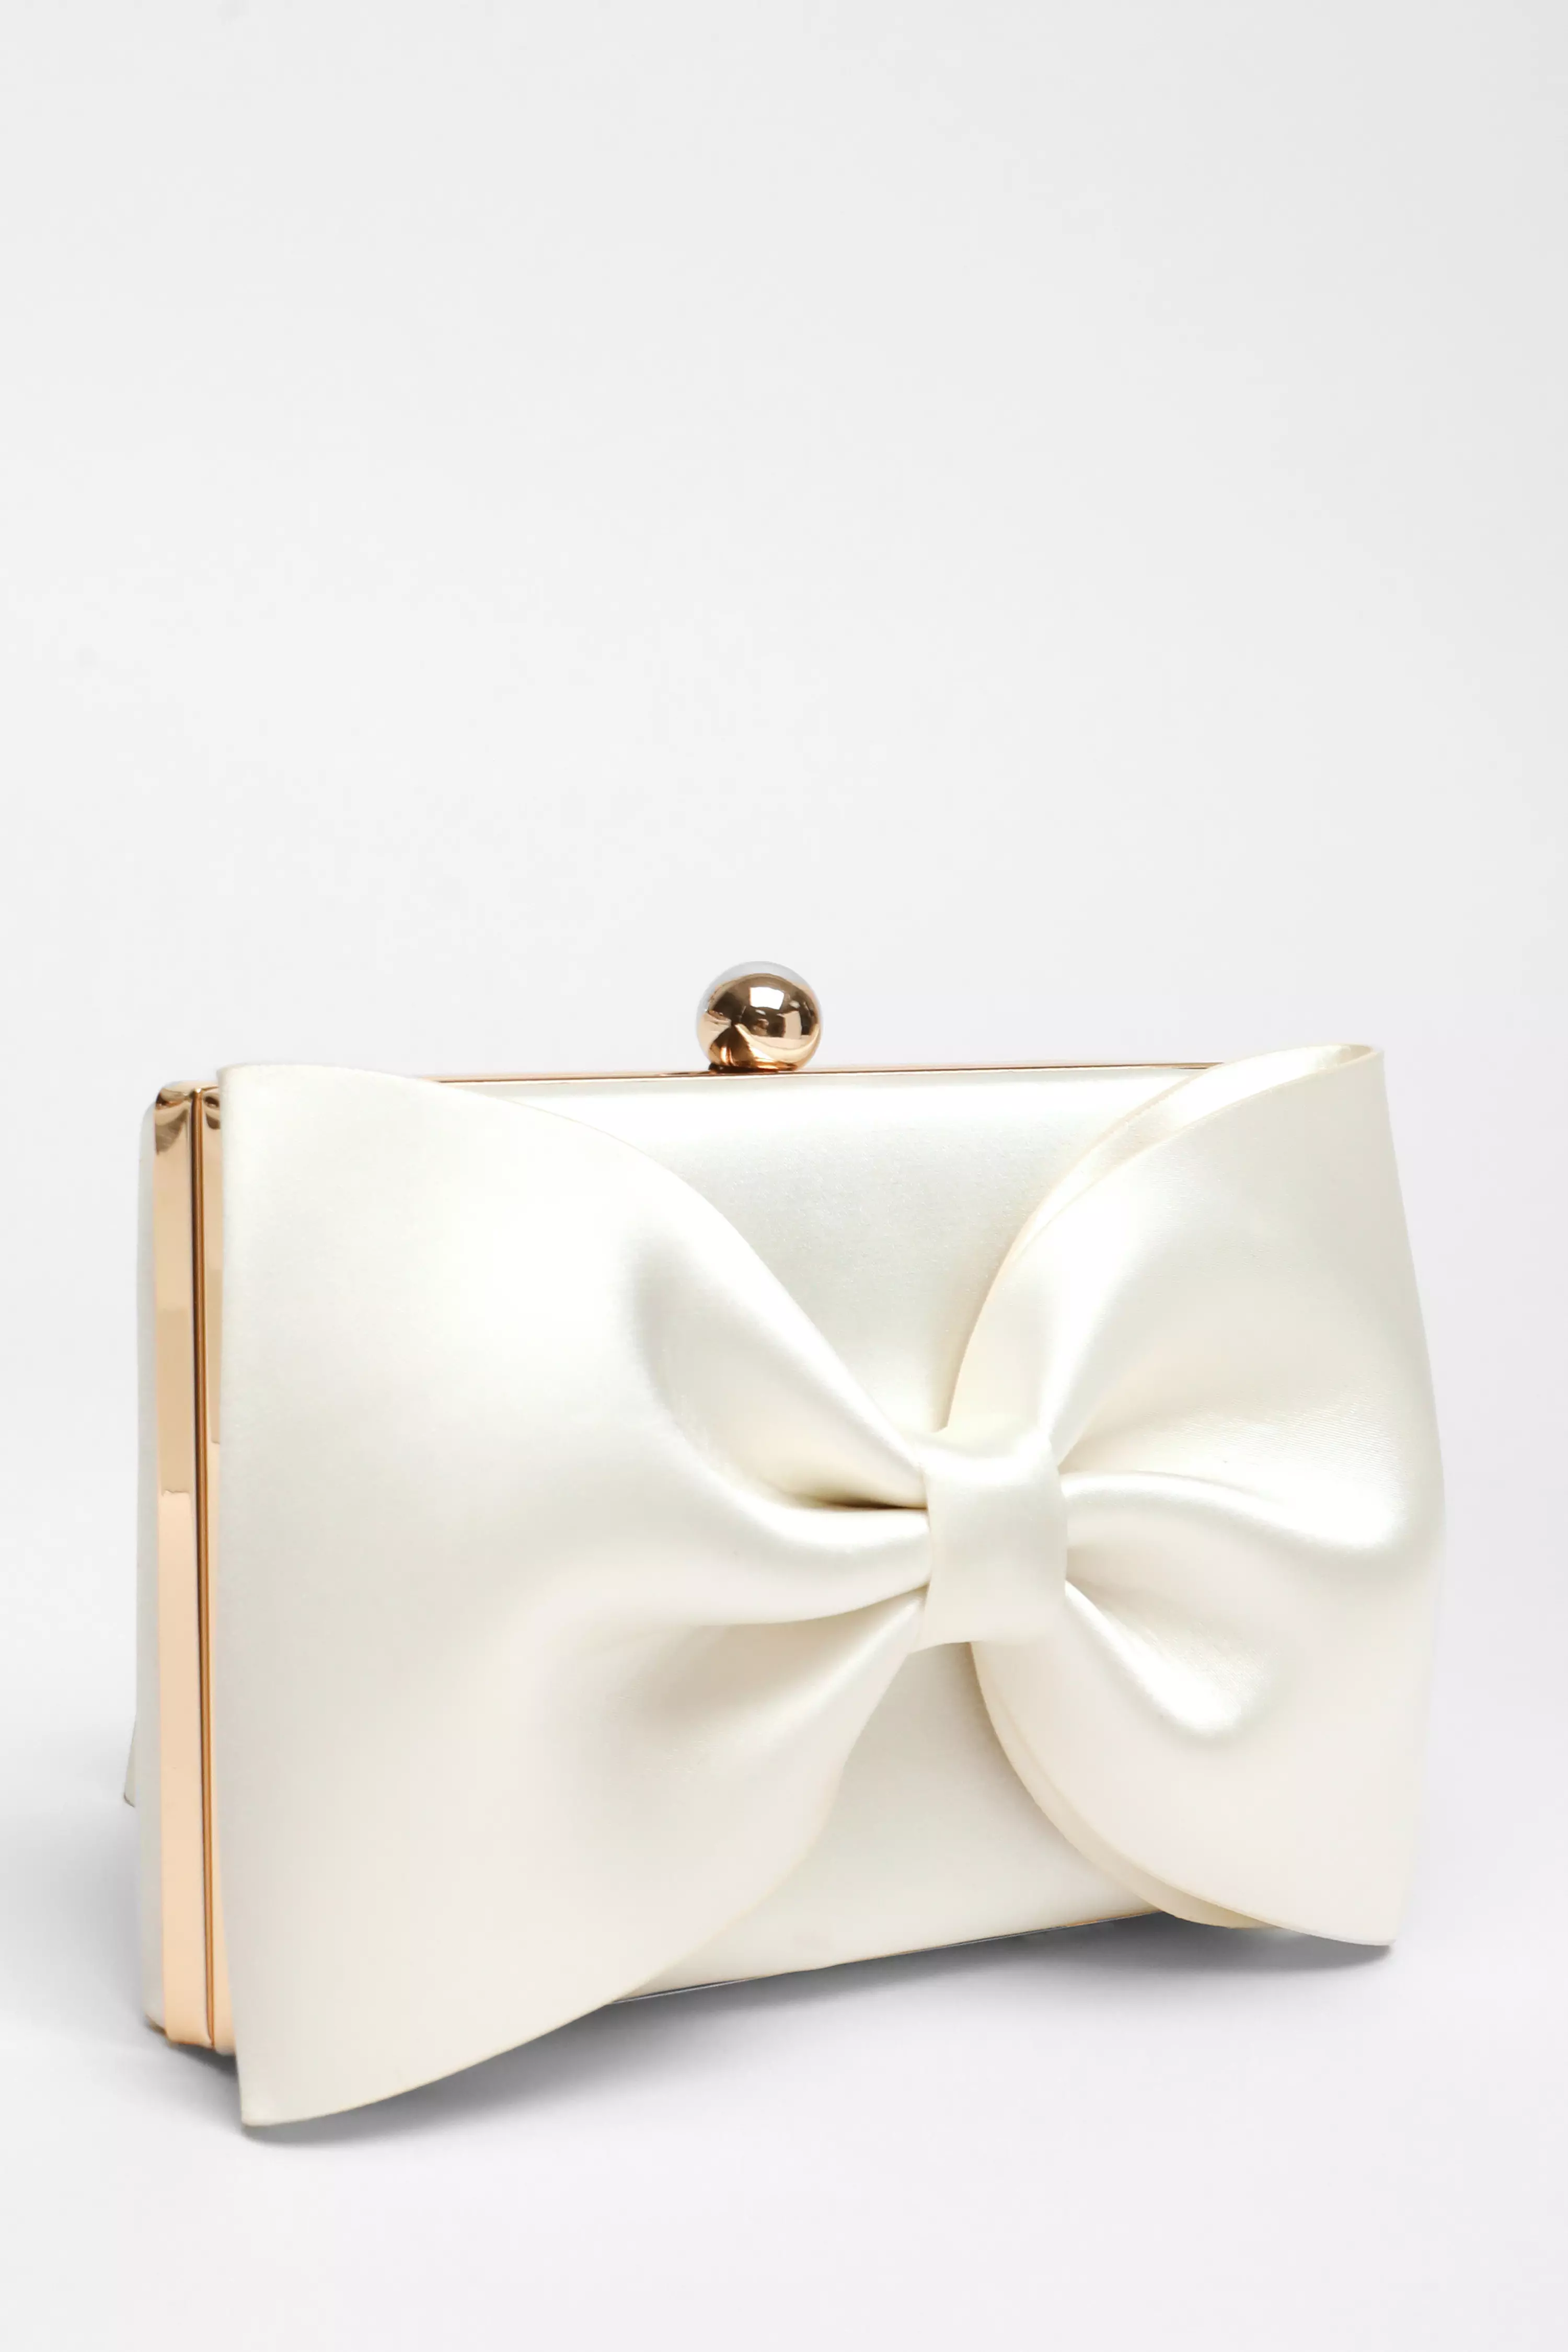 Bridal White Satin Bow Clutch Bag